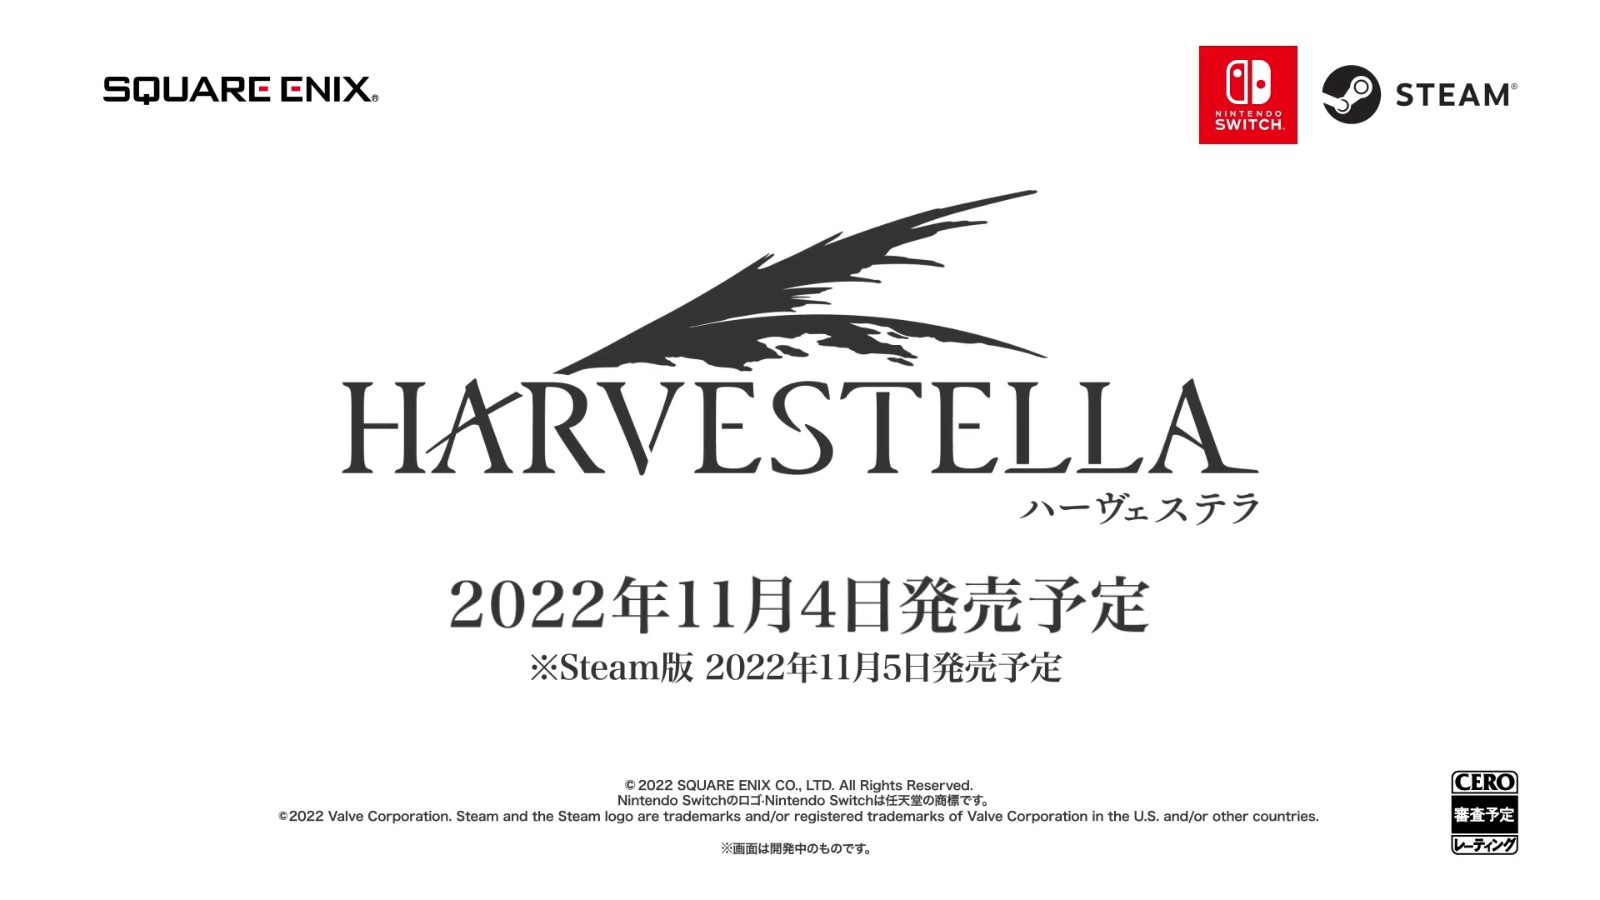 SE公布生活模拟RPG《Harvestella》 登陆PC和Switch